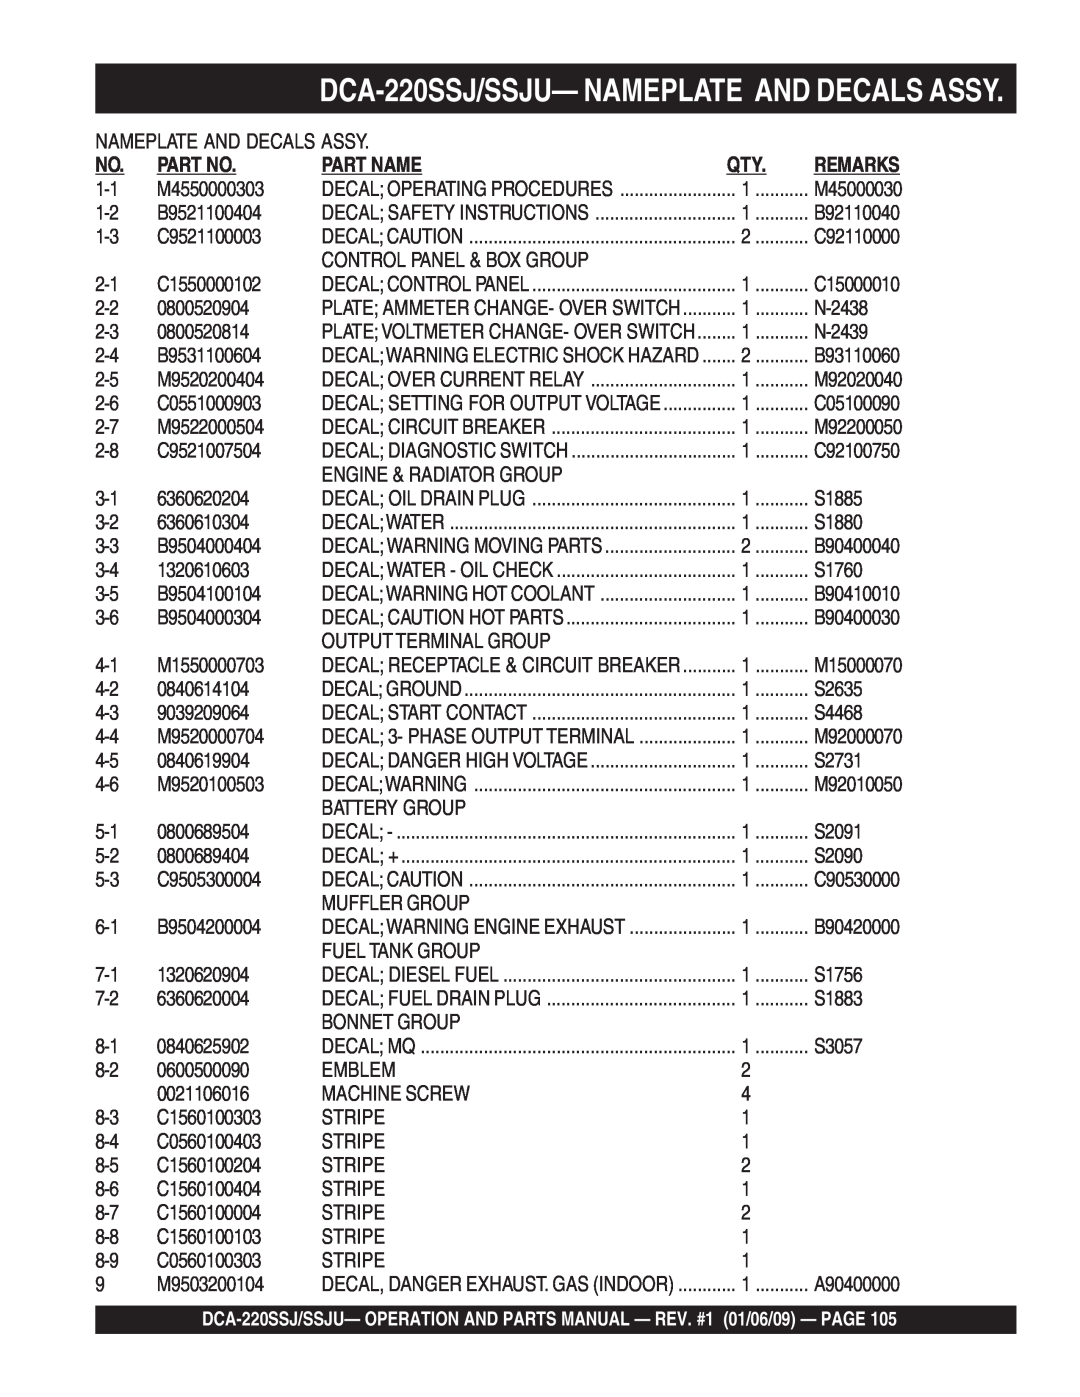 Multiquip operation manual DCA-220SSJ/SSJU- NAMEPLATE AND DECALS ASSY, Part Name, M45000030 